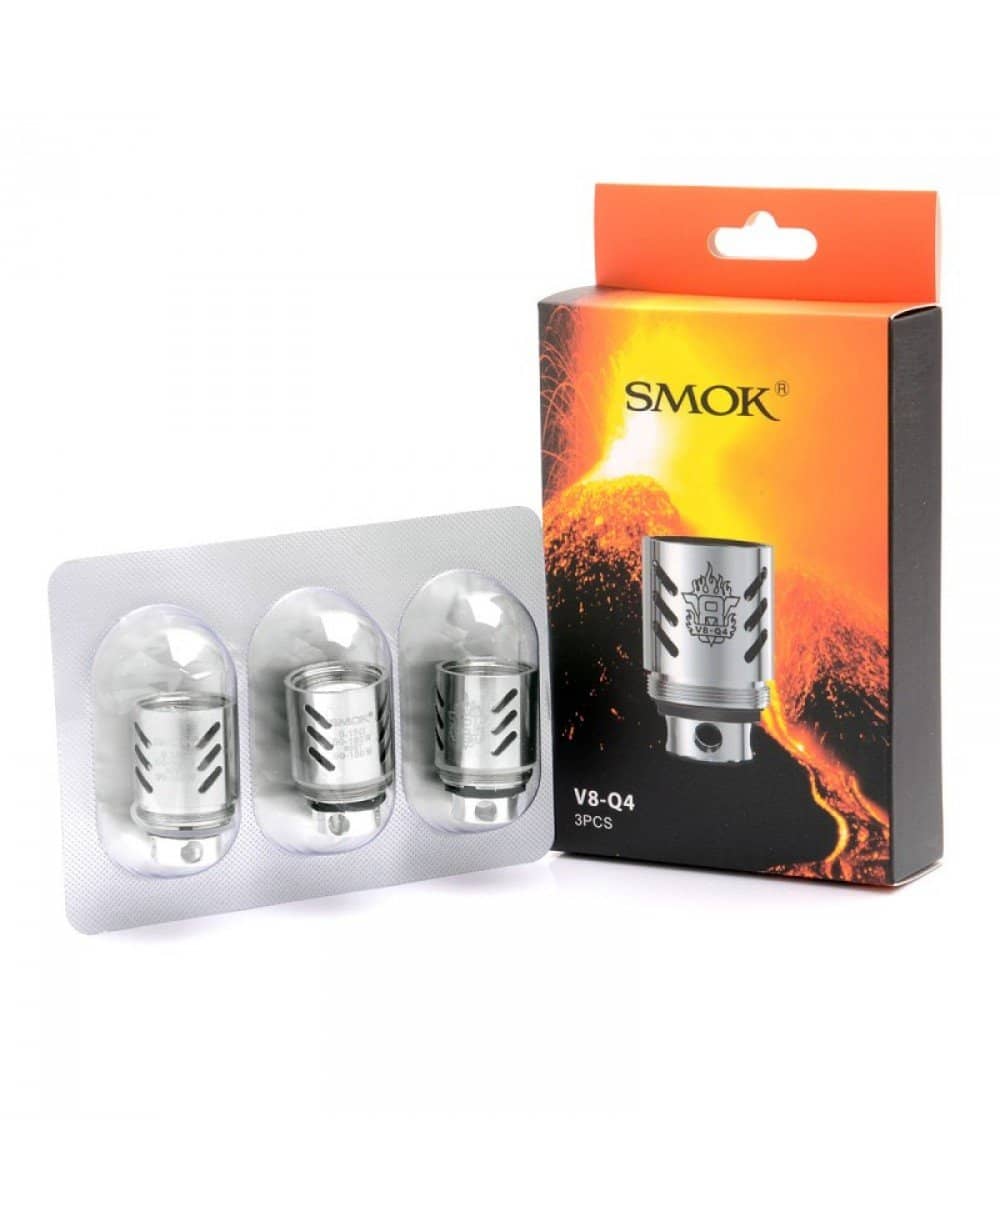 SMOK Cloud Beast TFV8 Coils (Price Per Coil) - Boss Vapes